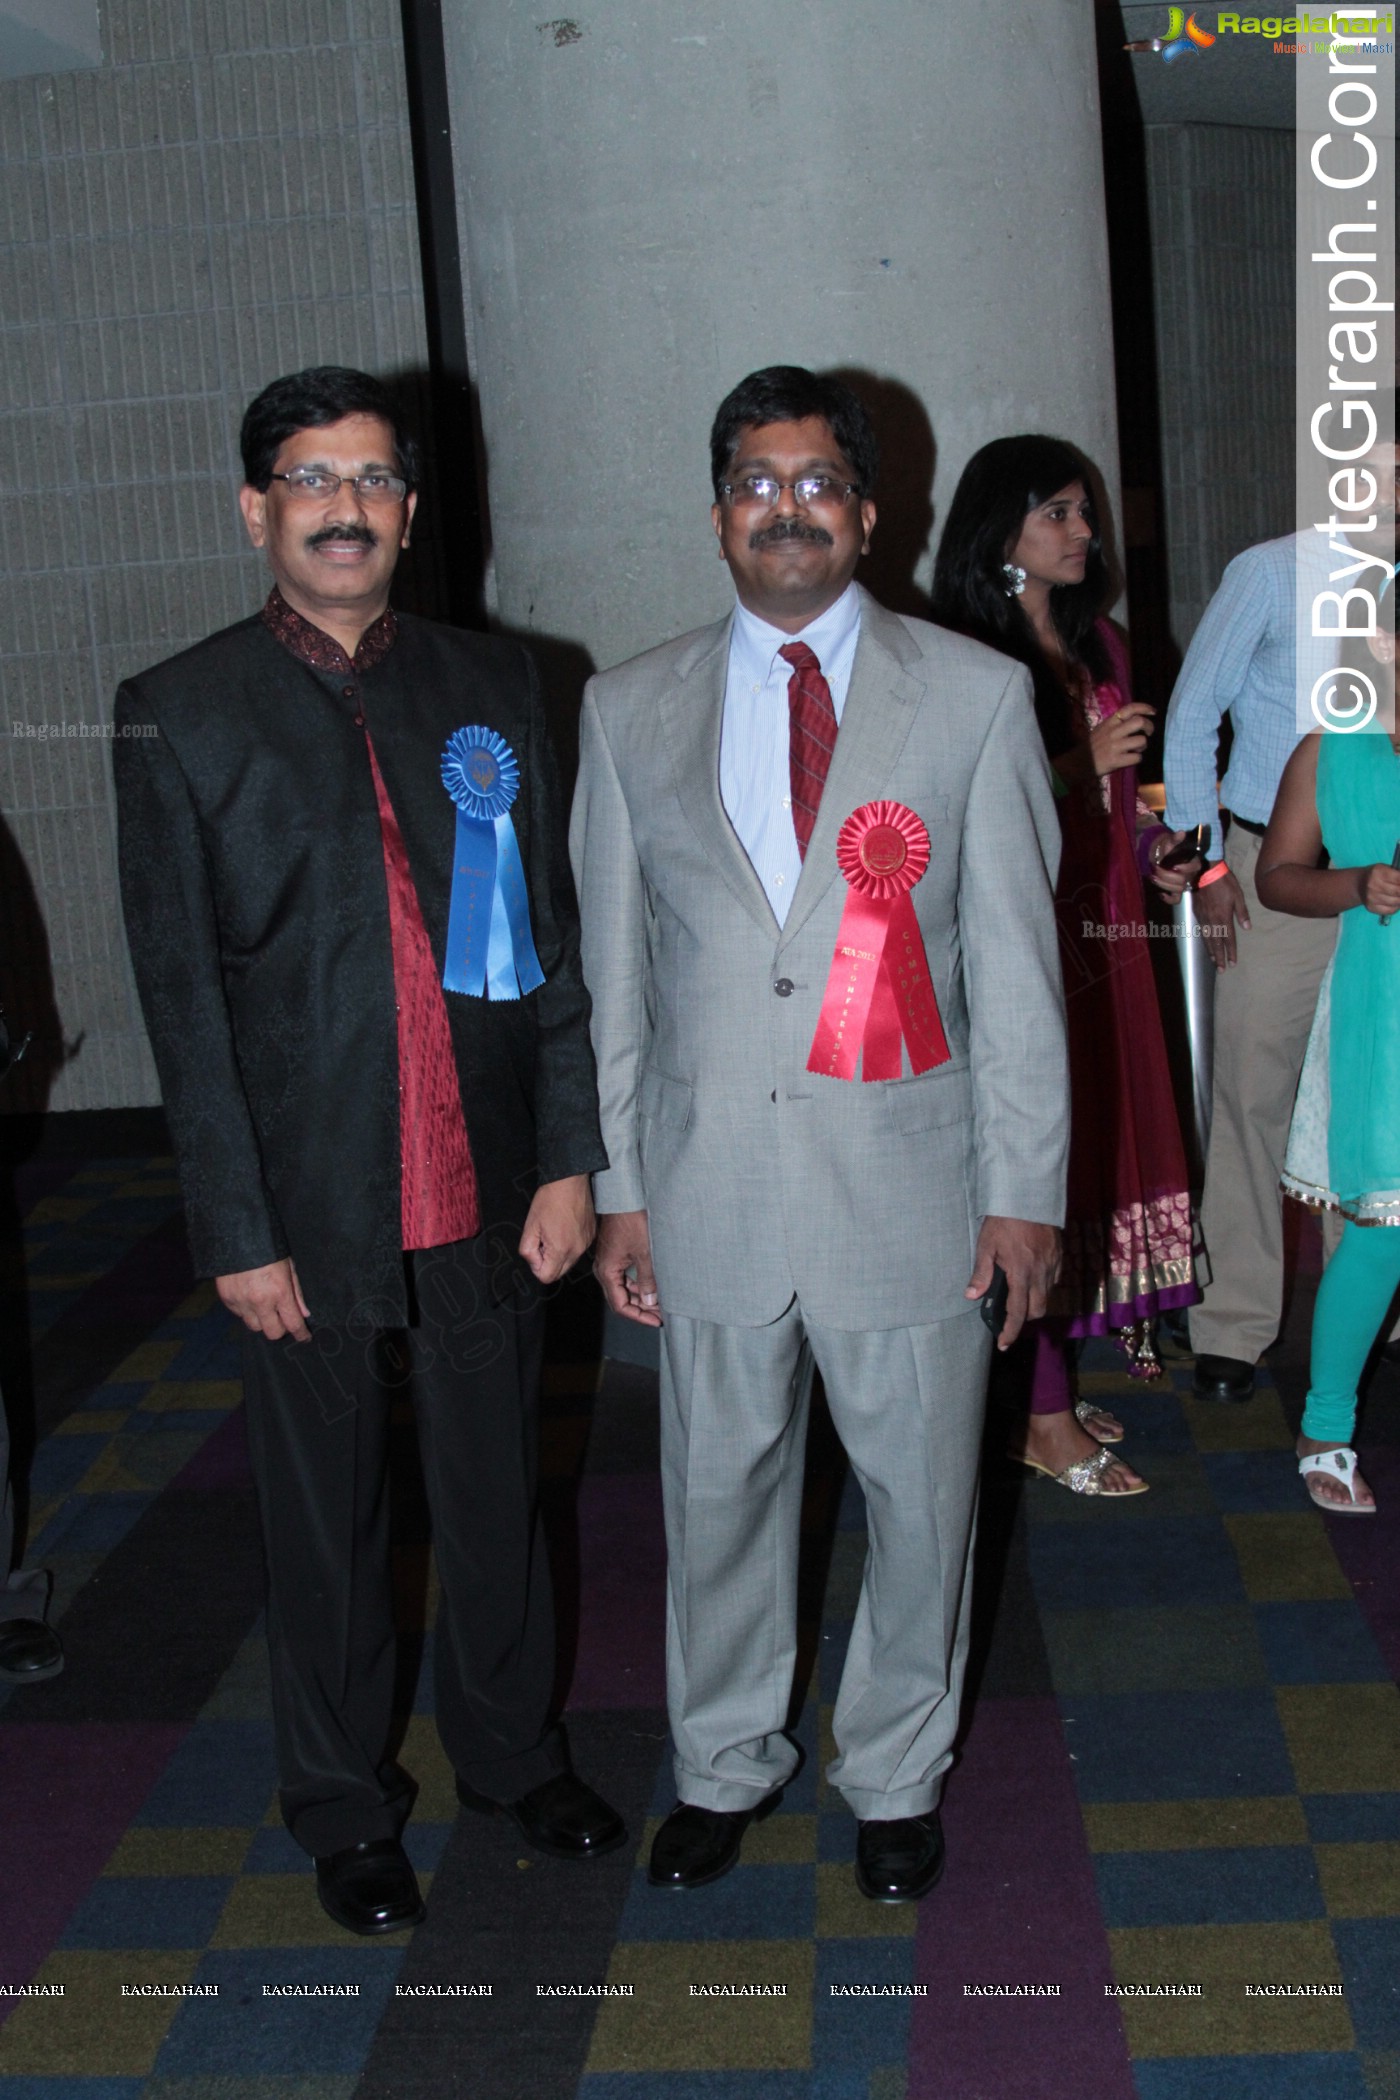 ATA 2012 Convention Banquet